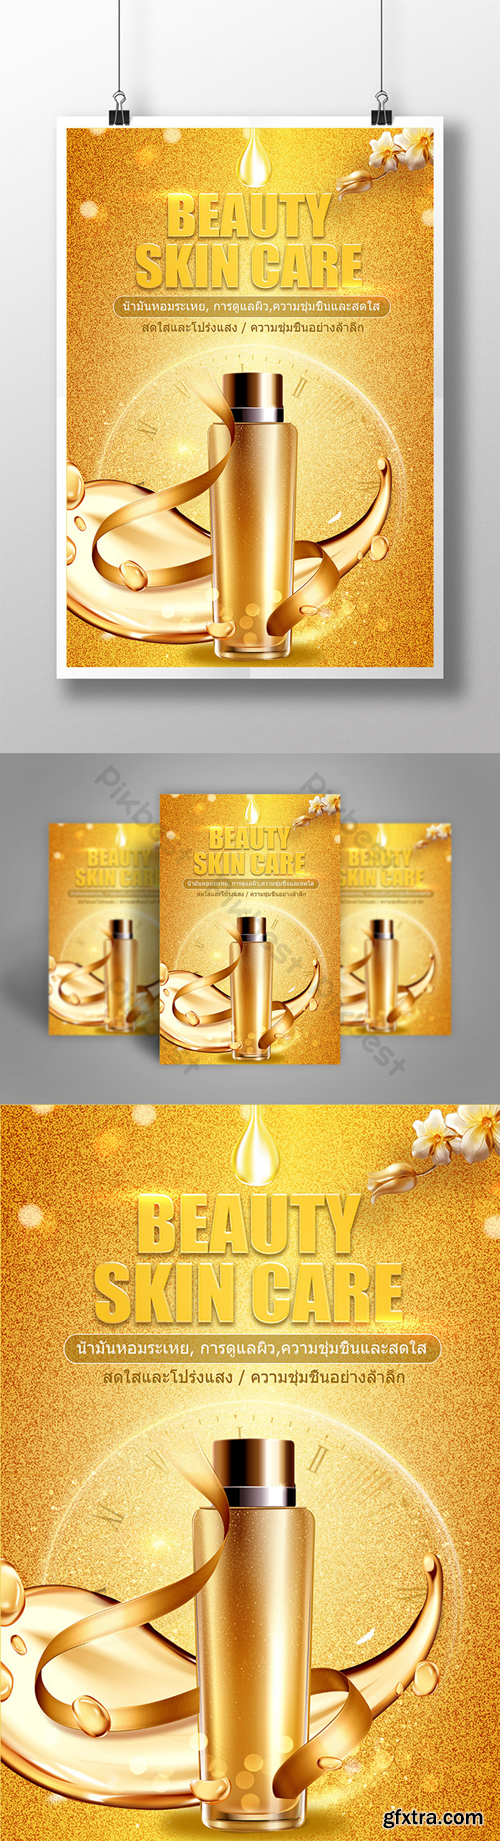 Golden highend essential oil skin care beauty poster Template PSD